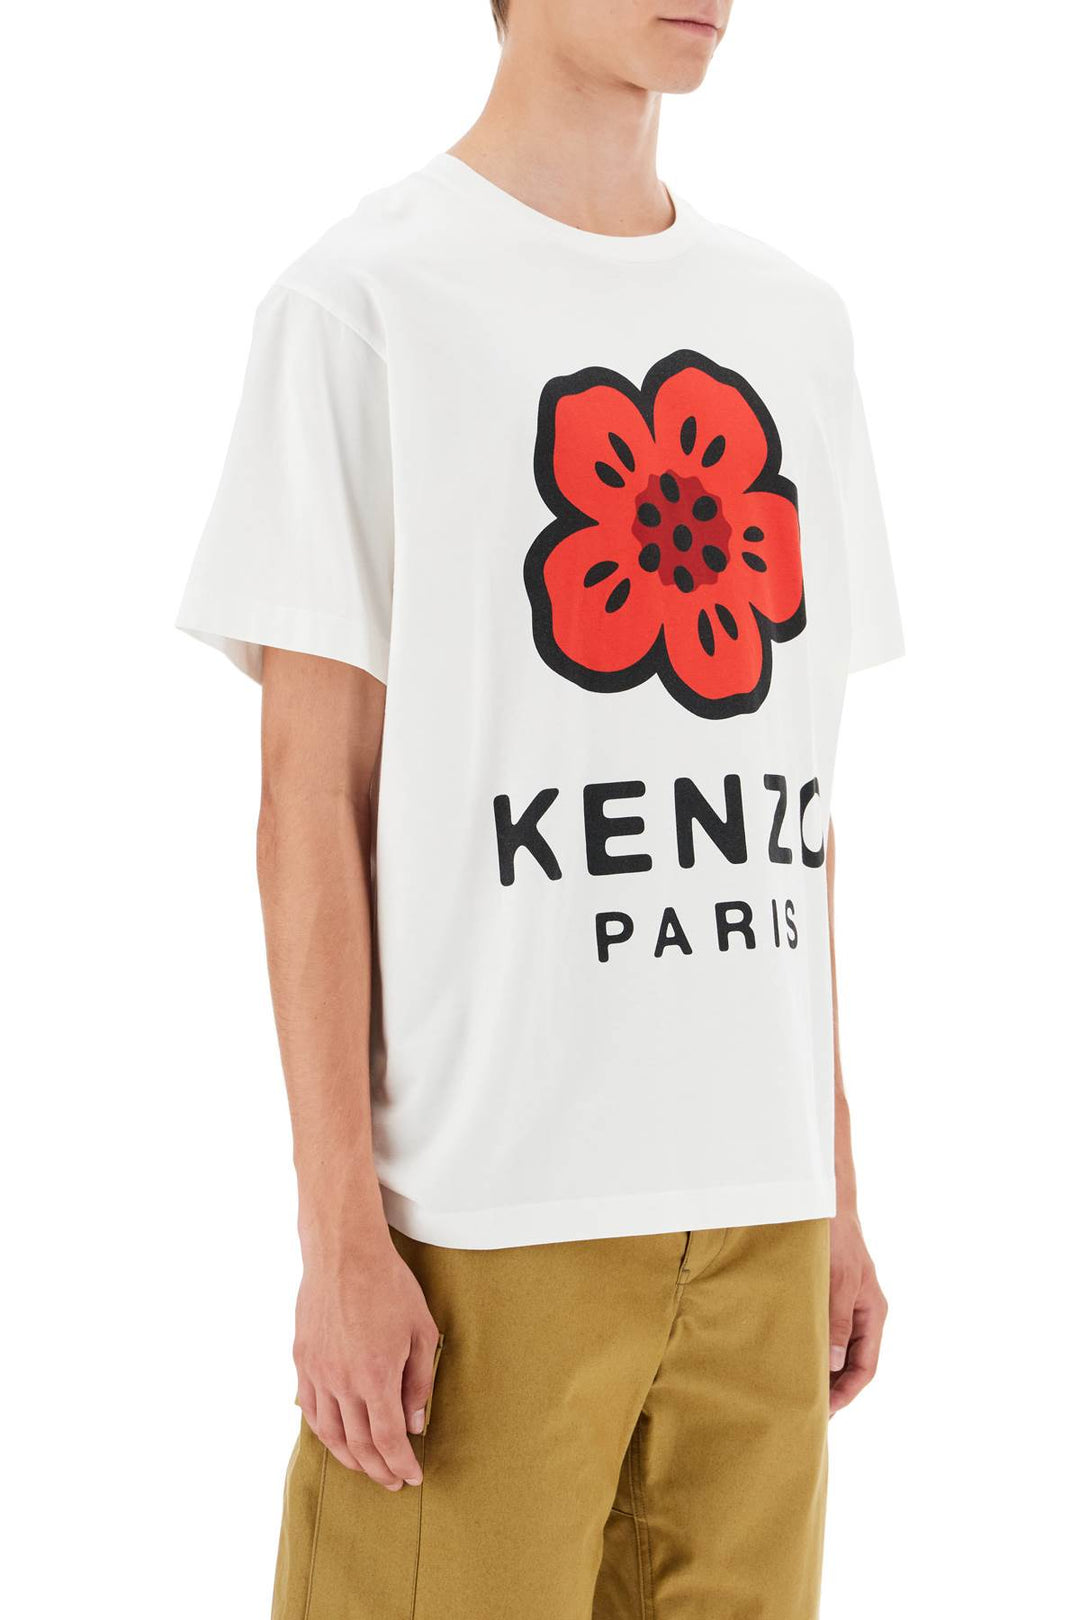 Kenzo Boke Flower Printed T Shirt   White